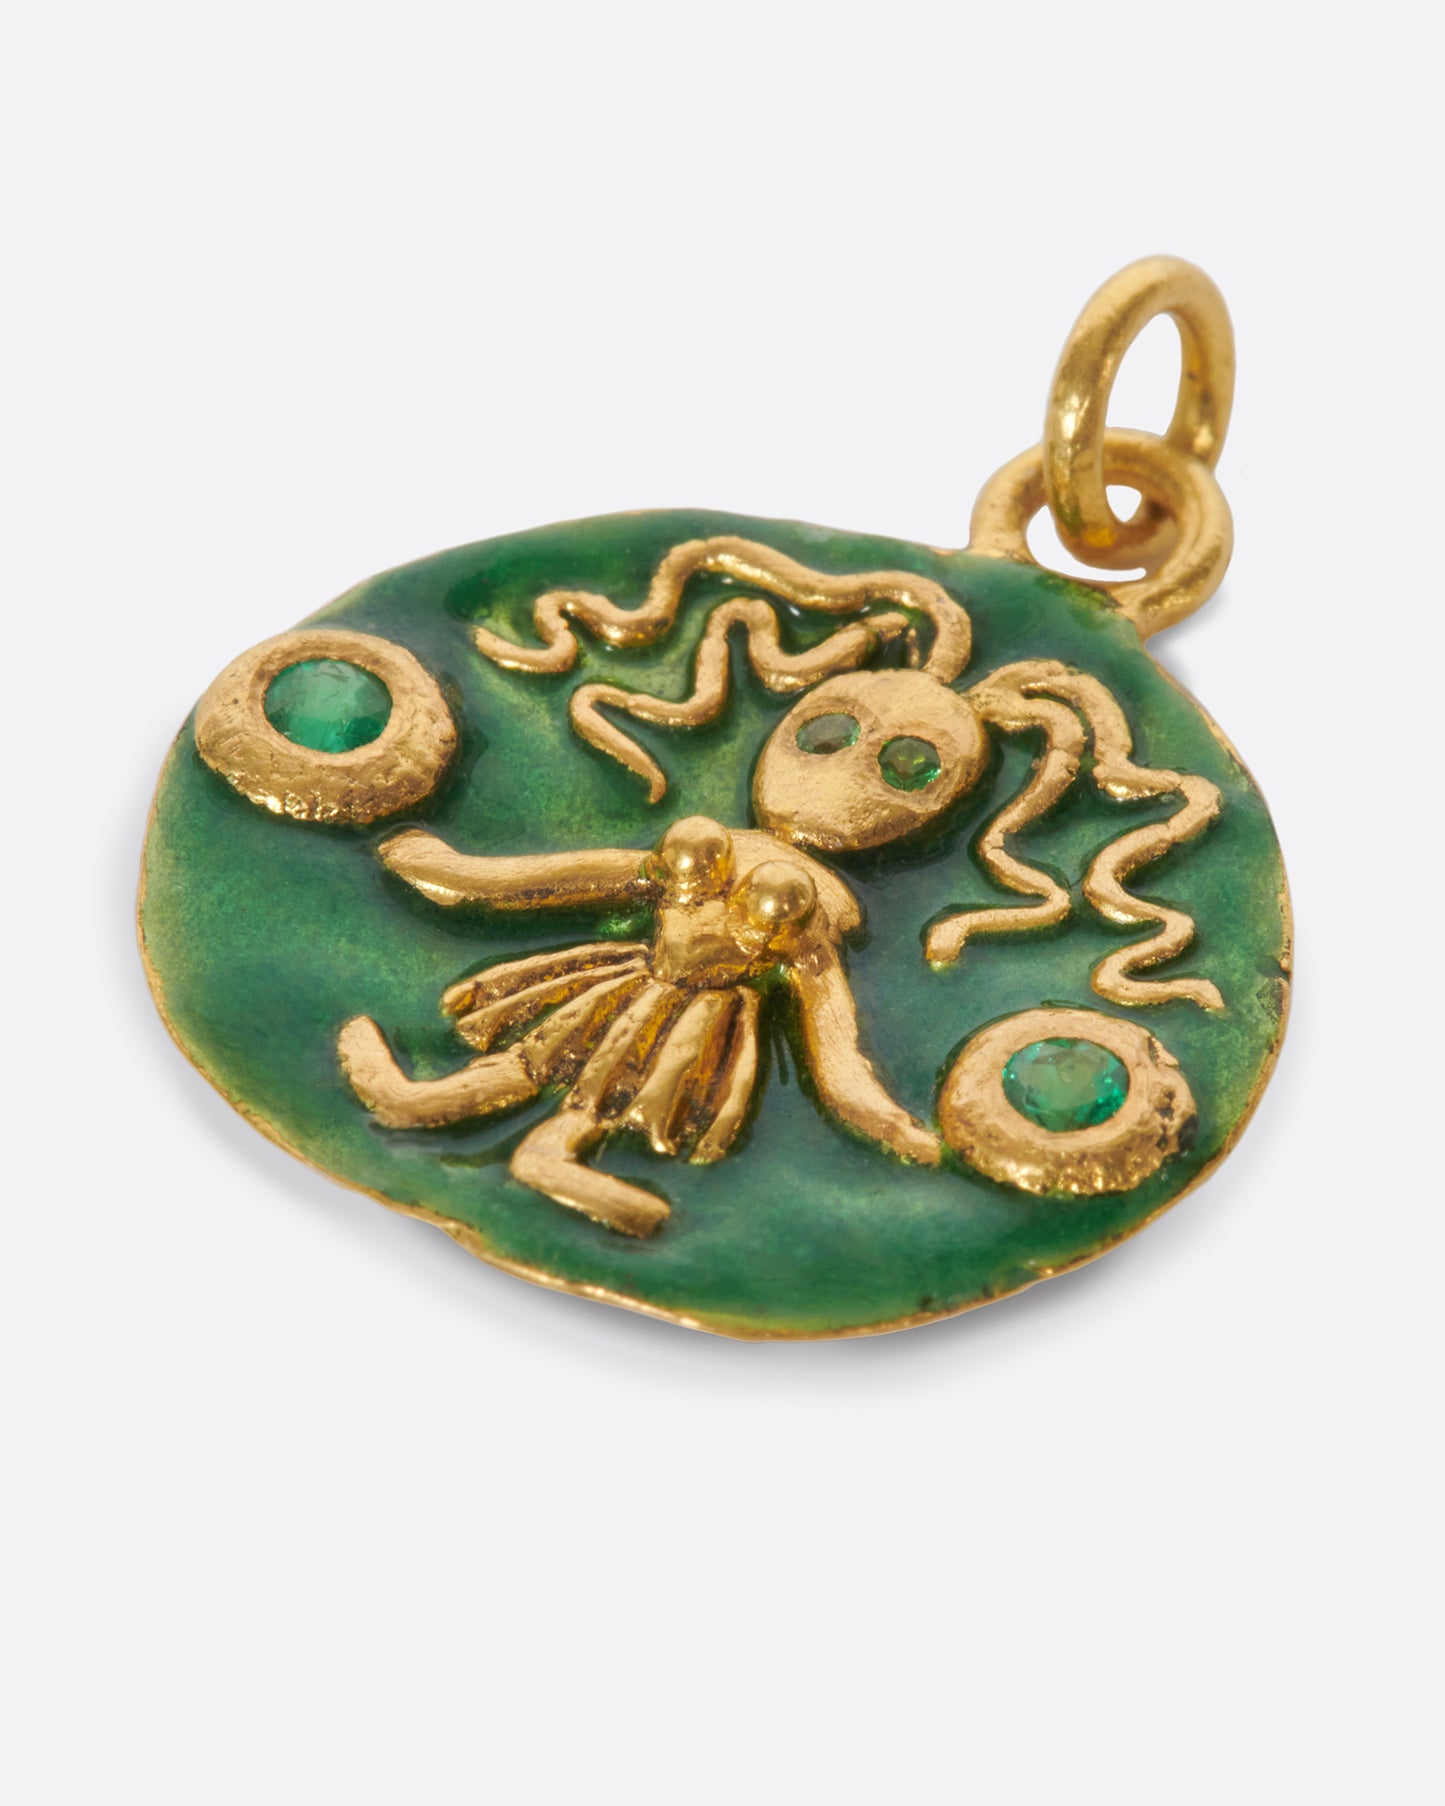 A round, high karat gold medallion pendant featuring a Virgo icon holding two tsavorite garnets.